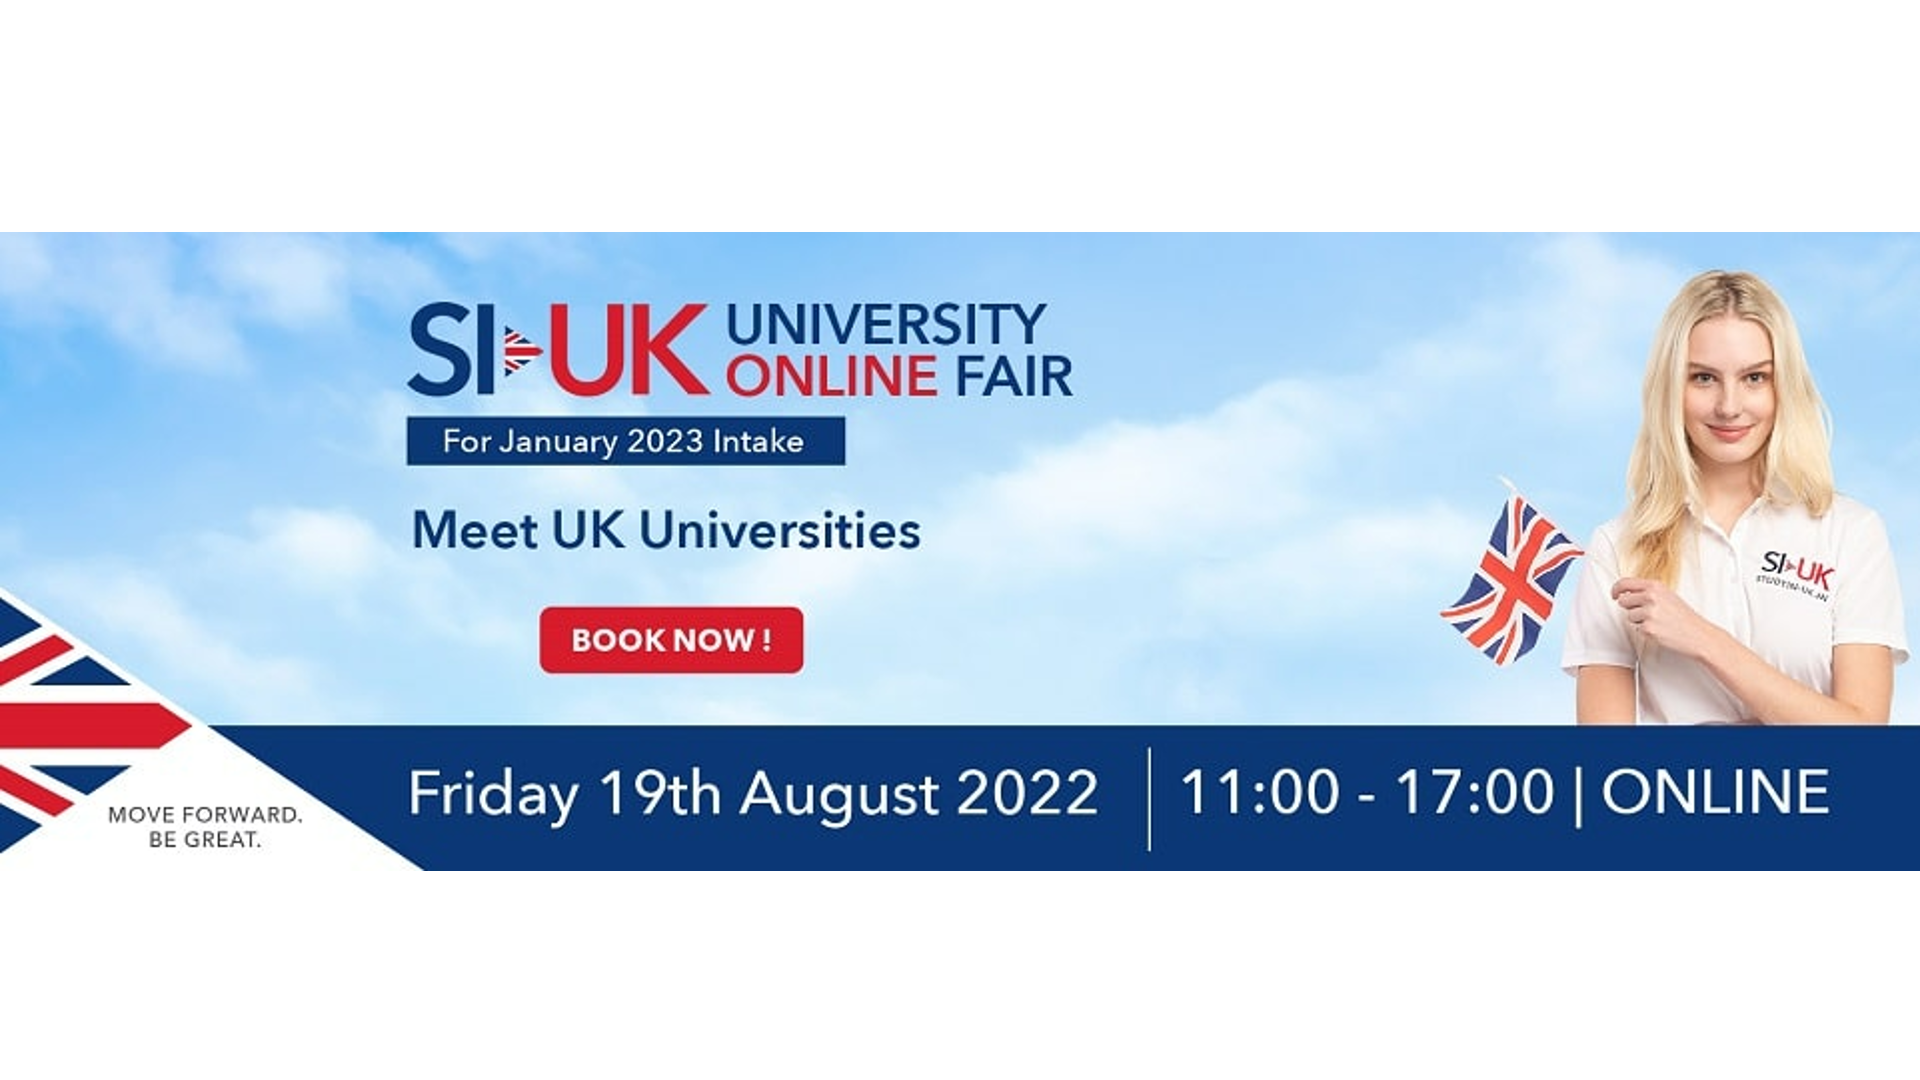 SI-UK University Fair Pune 2022, Online Event